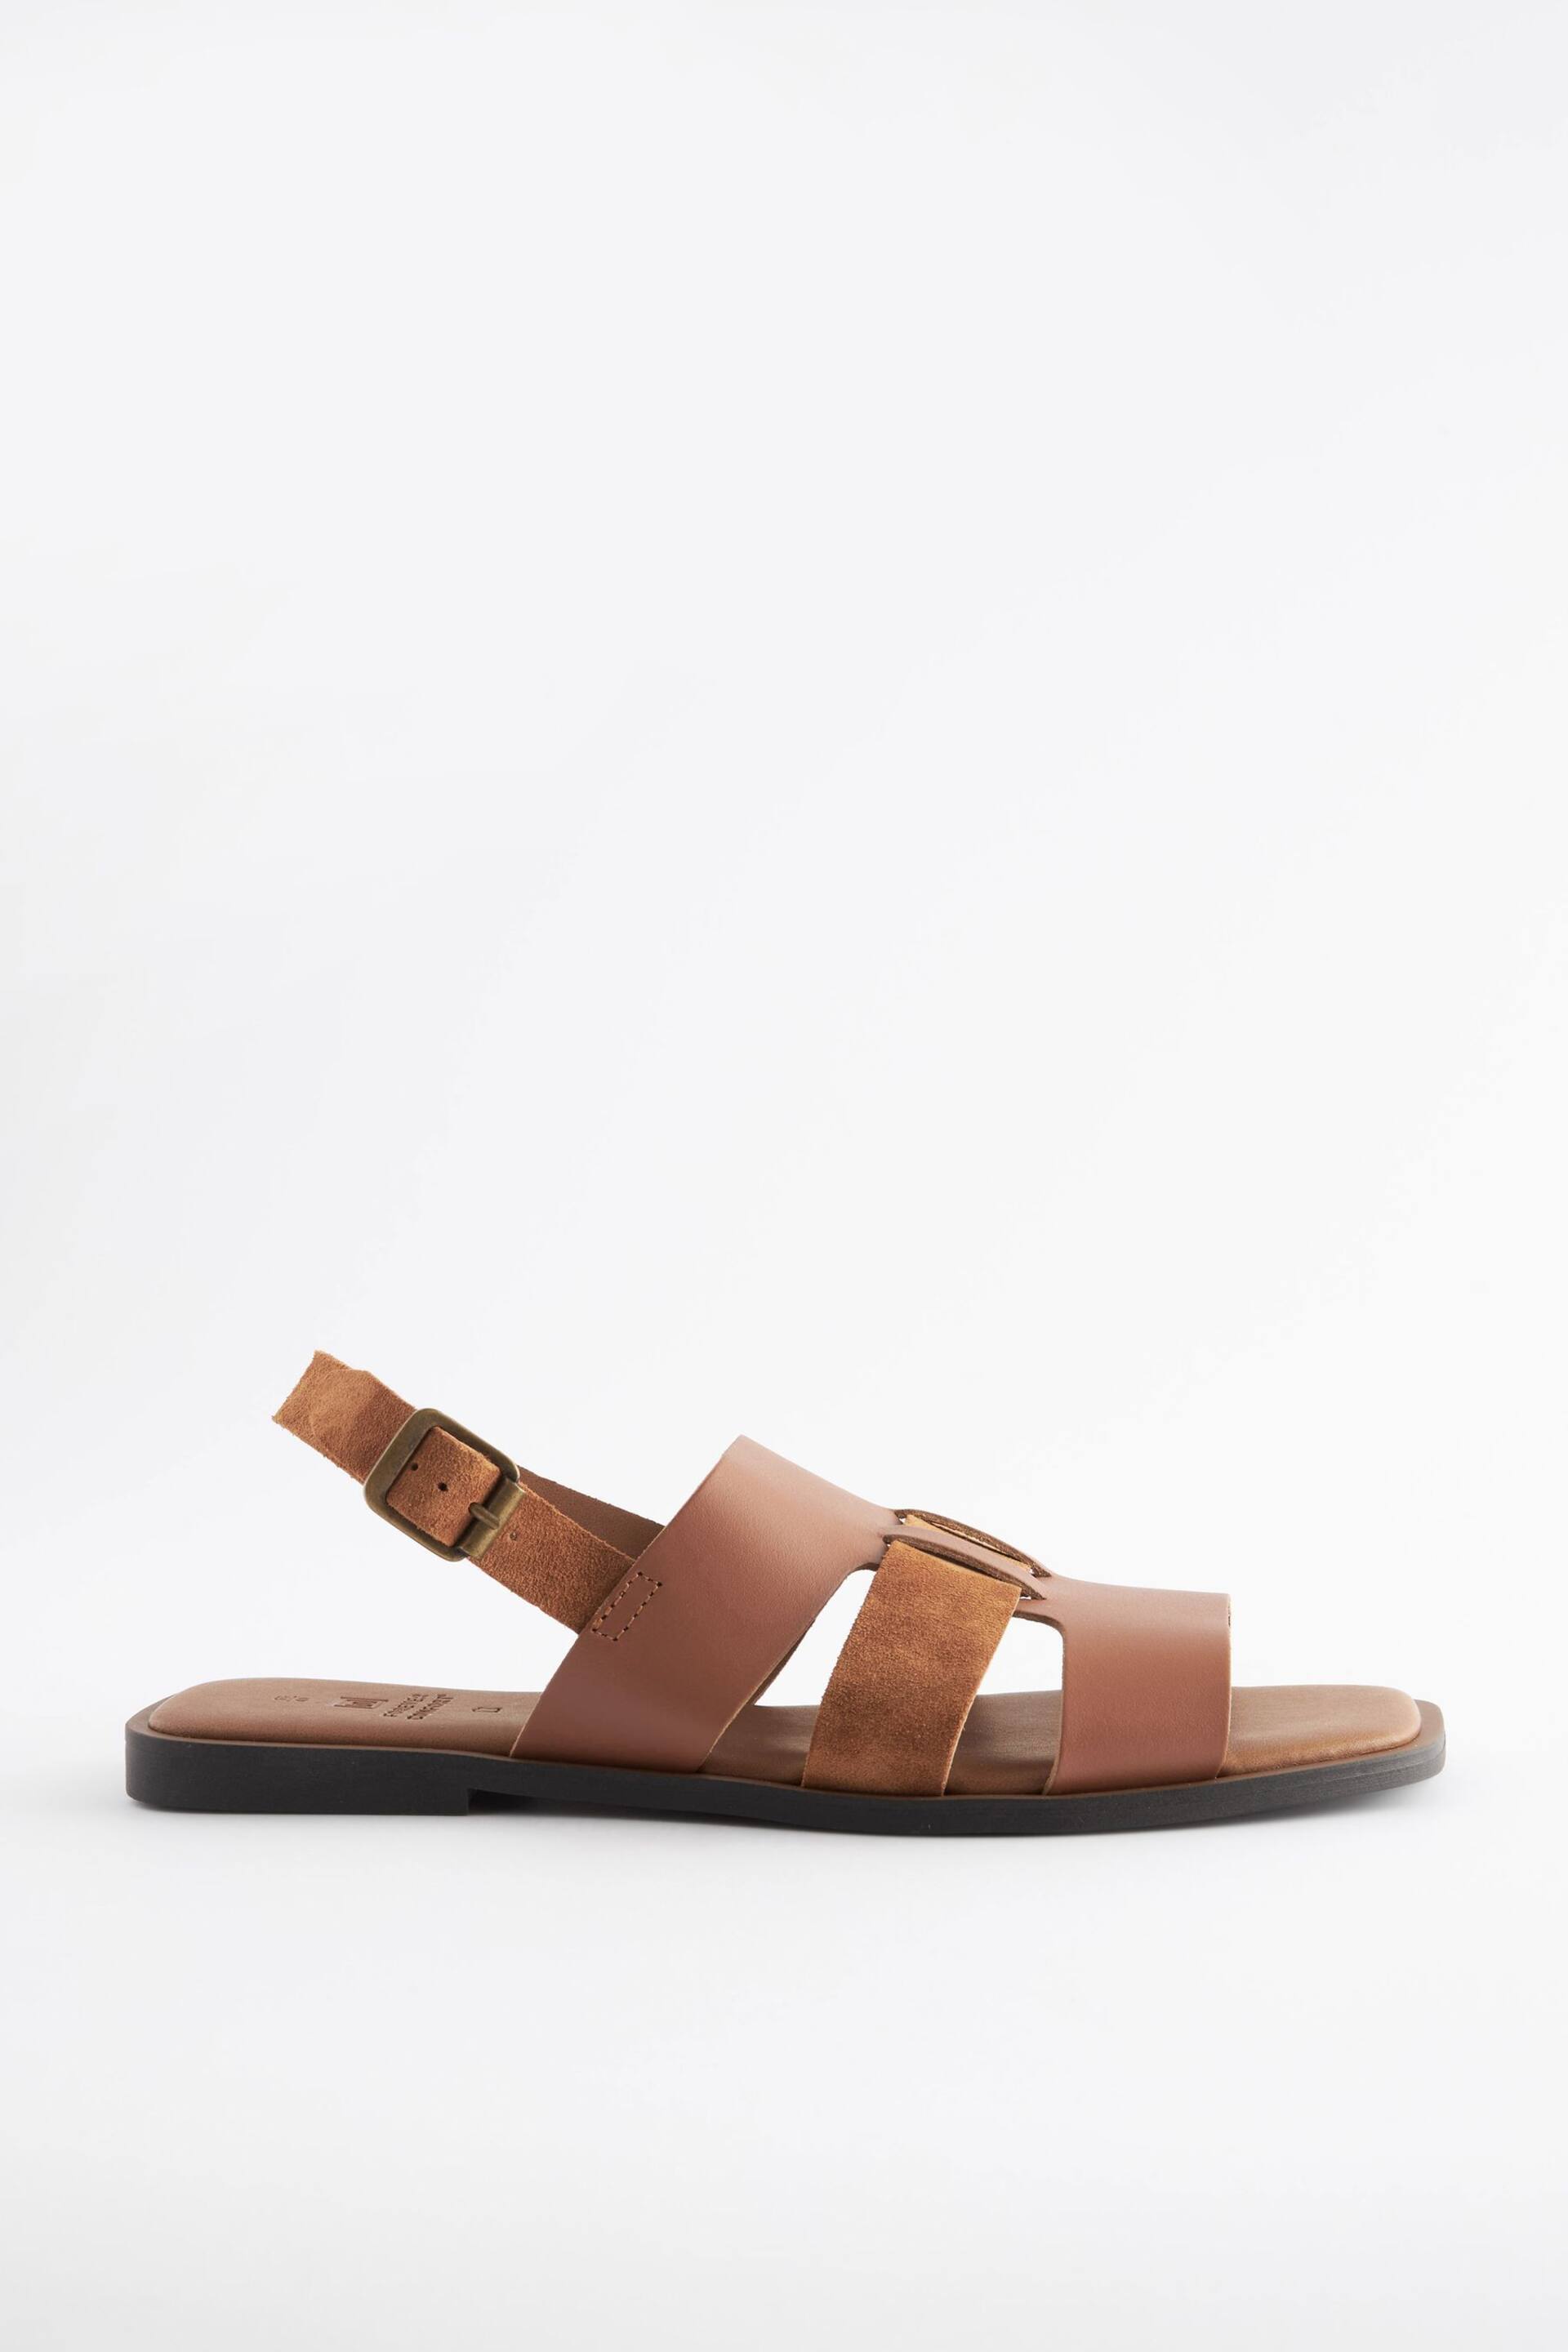 Tan Brown Regular/Wide Fit Forever Comfort® Leather Slingback Sandals - Image 2 of 5